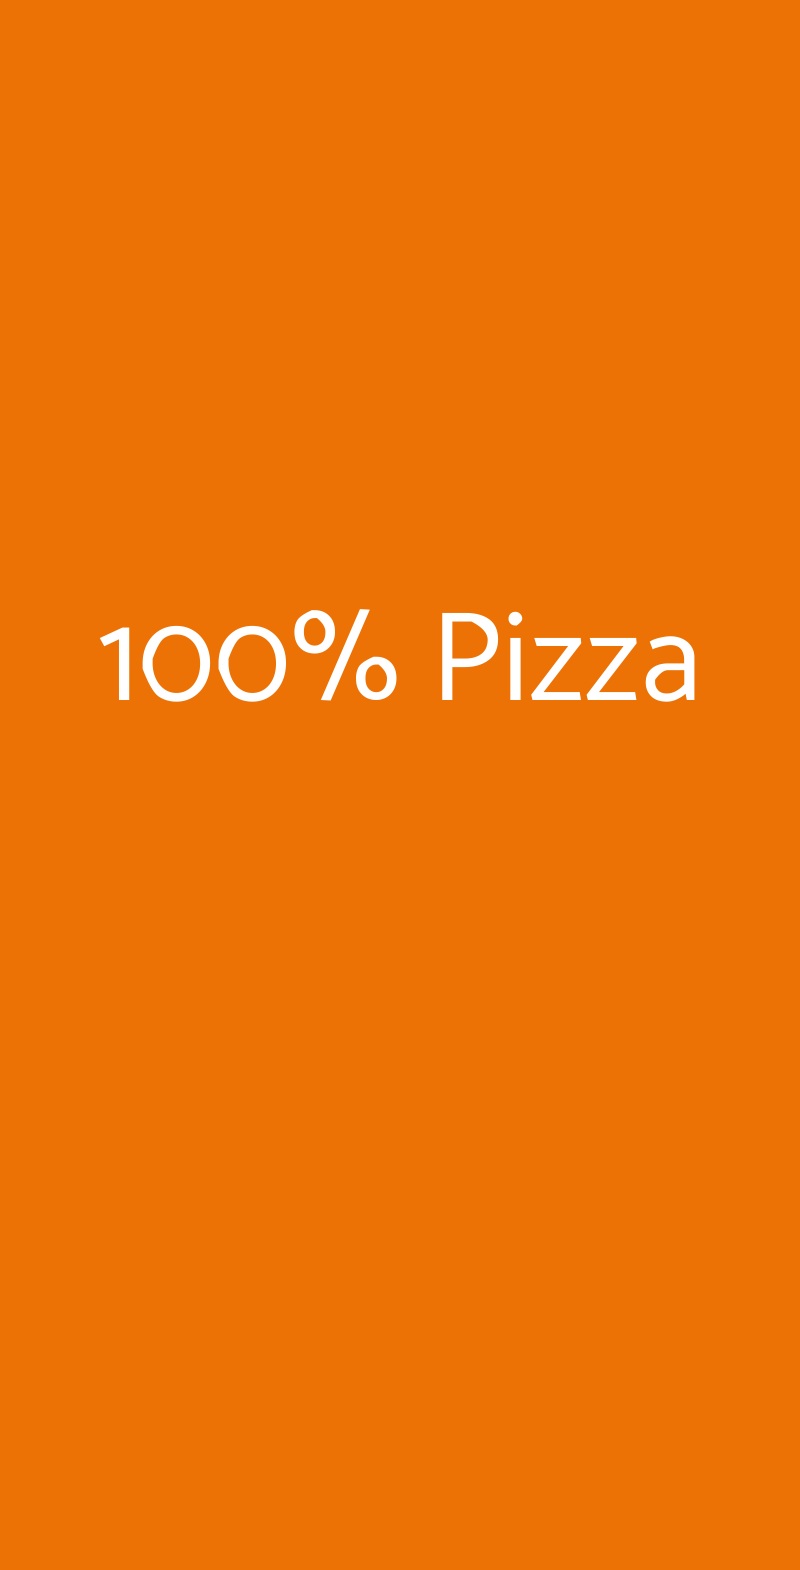 100% Pizza Firenze menù 1 pagina